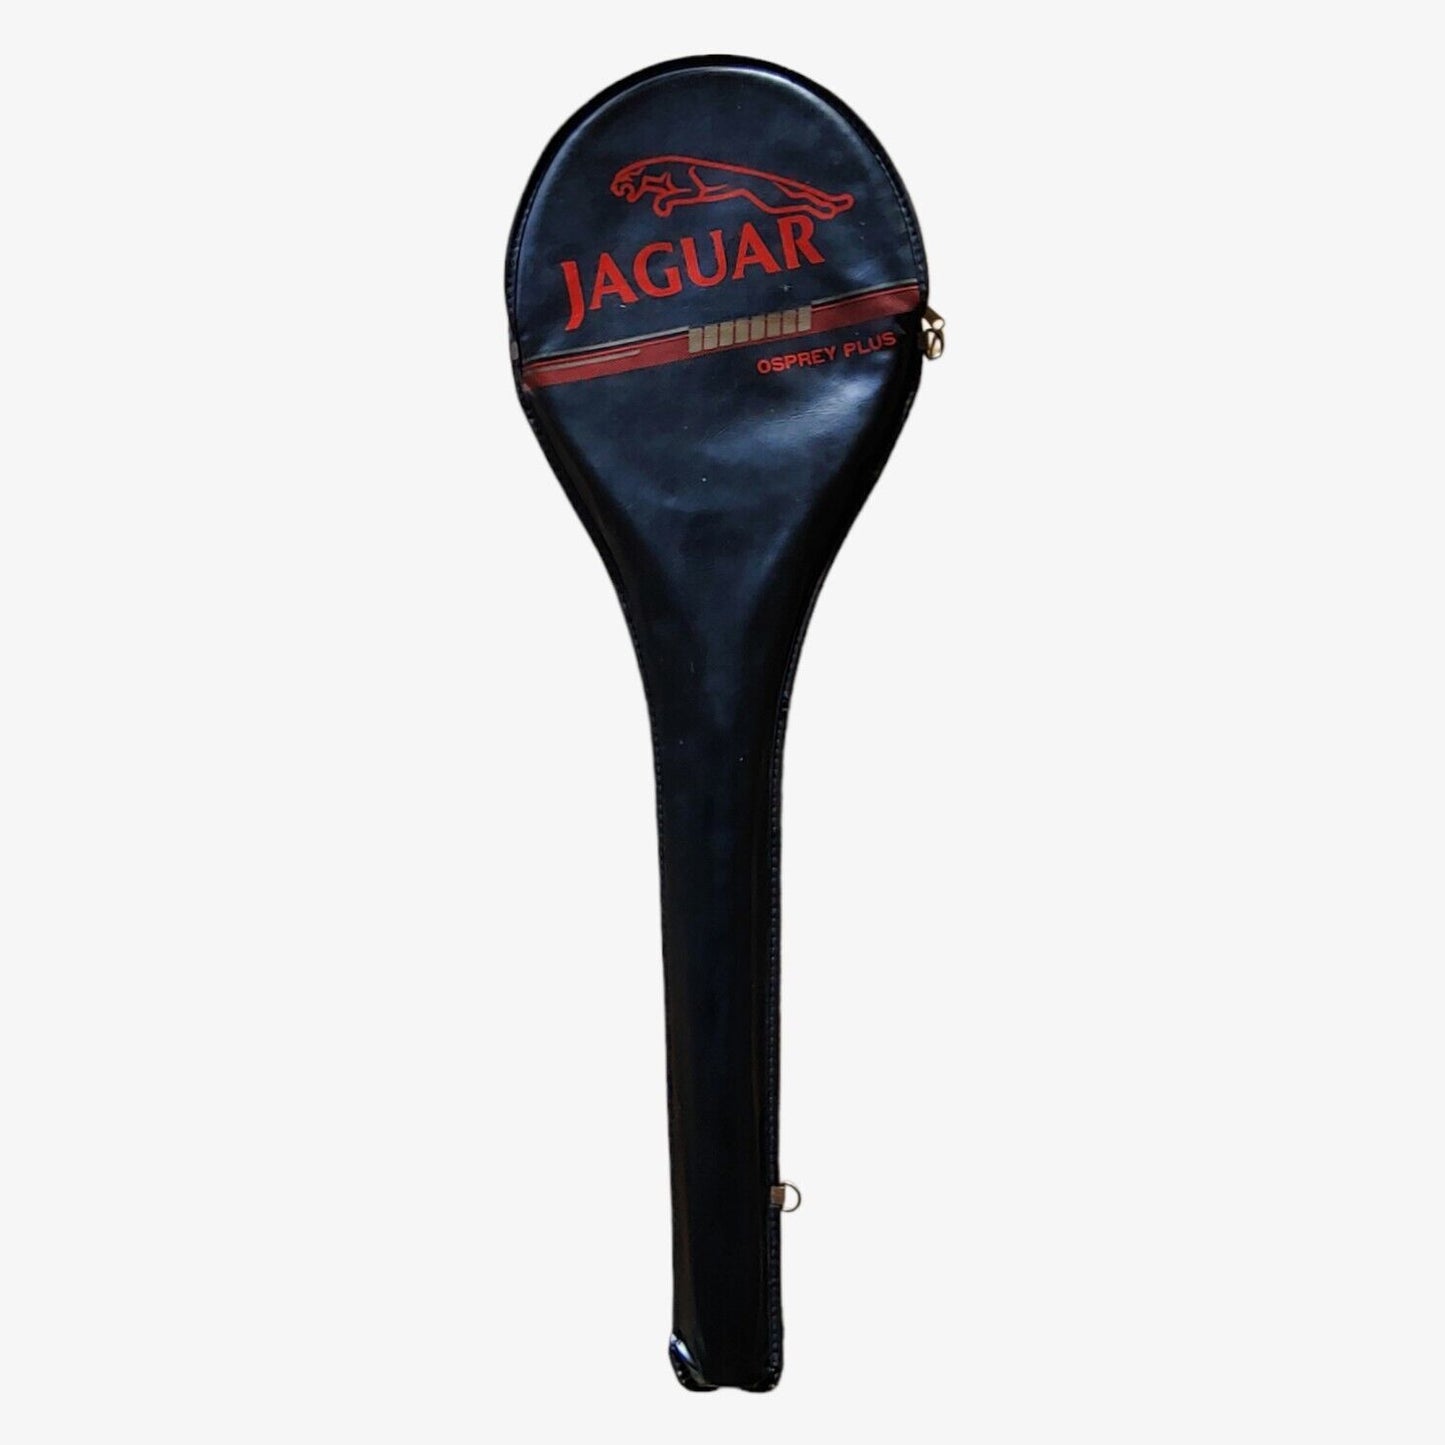 Vintage Jaguar Osprey Plus Squash Racket - Casspios Dream